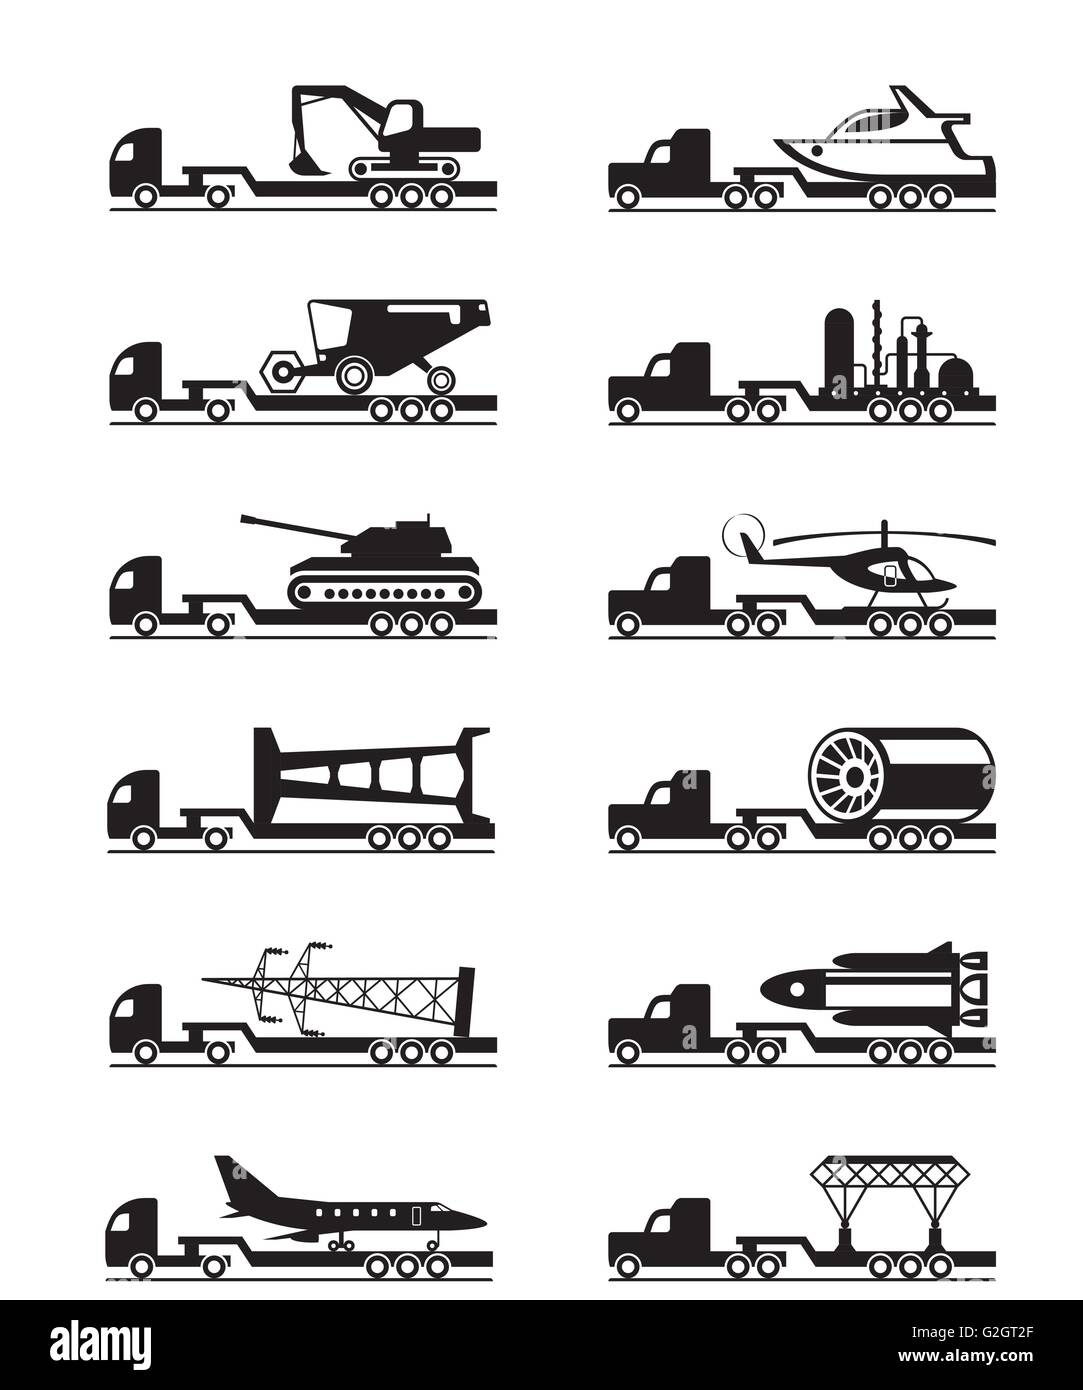 LKW mit übergroßen Lasten - Vektor-illustration Stock Vektor